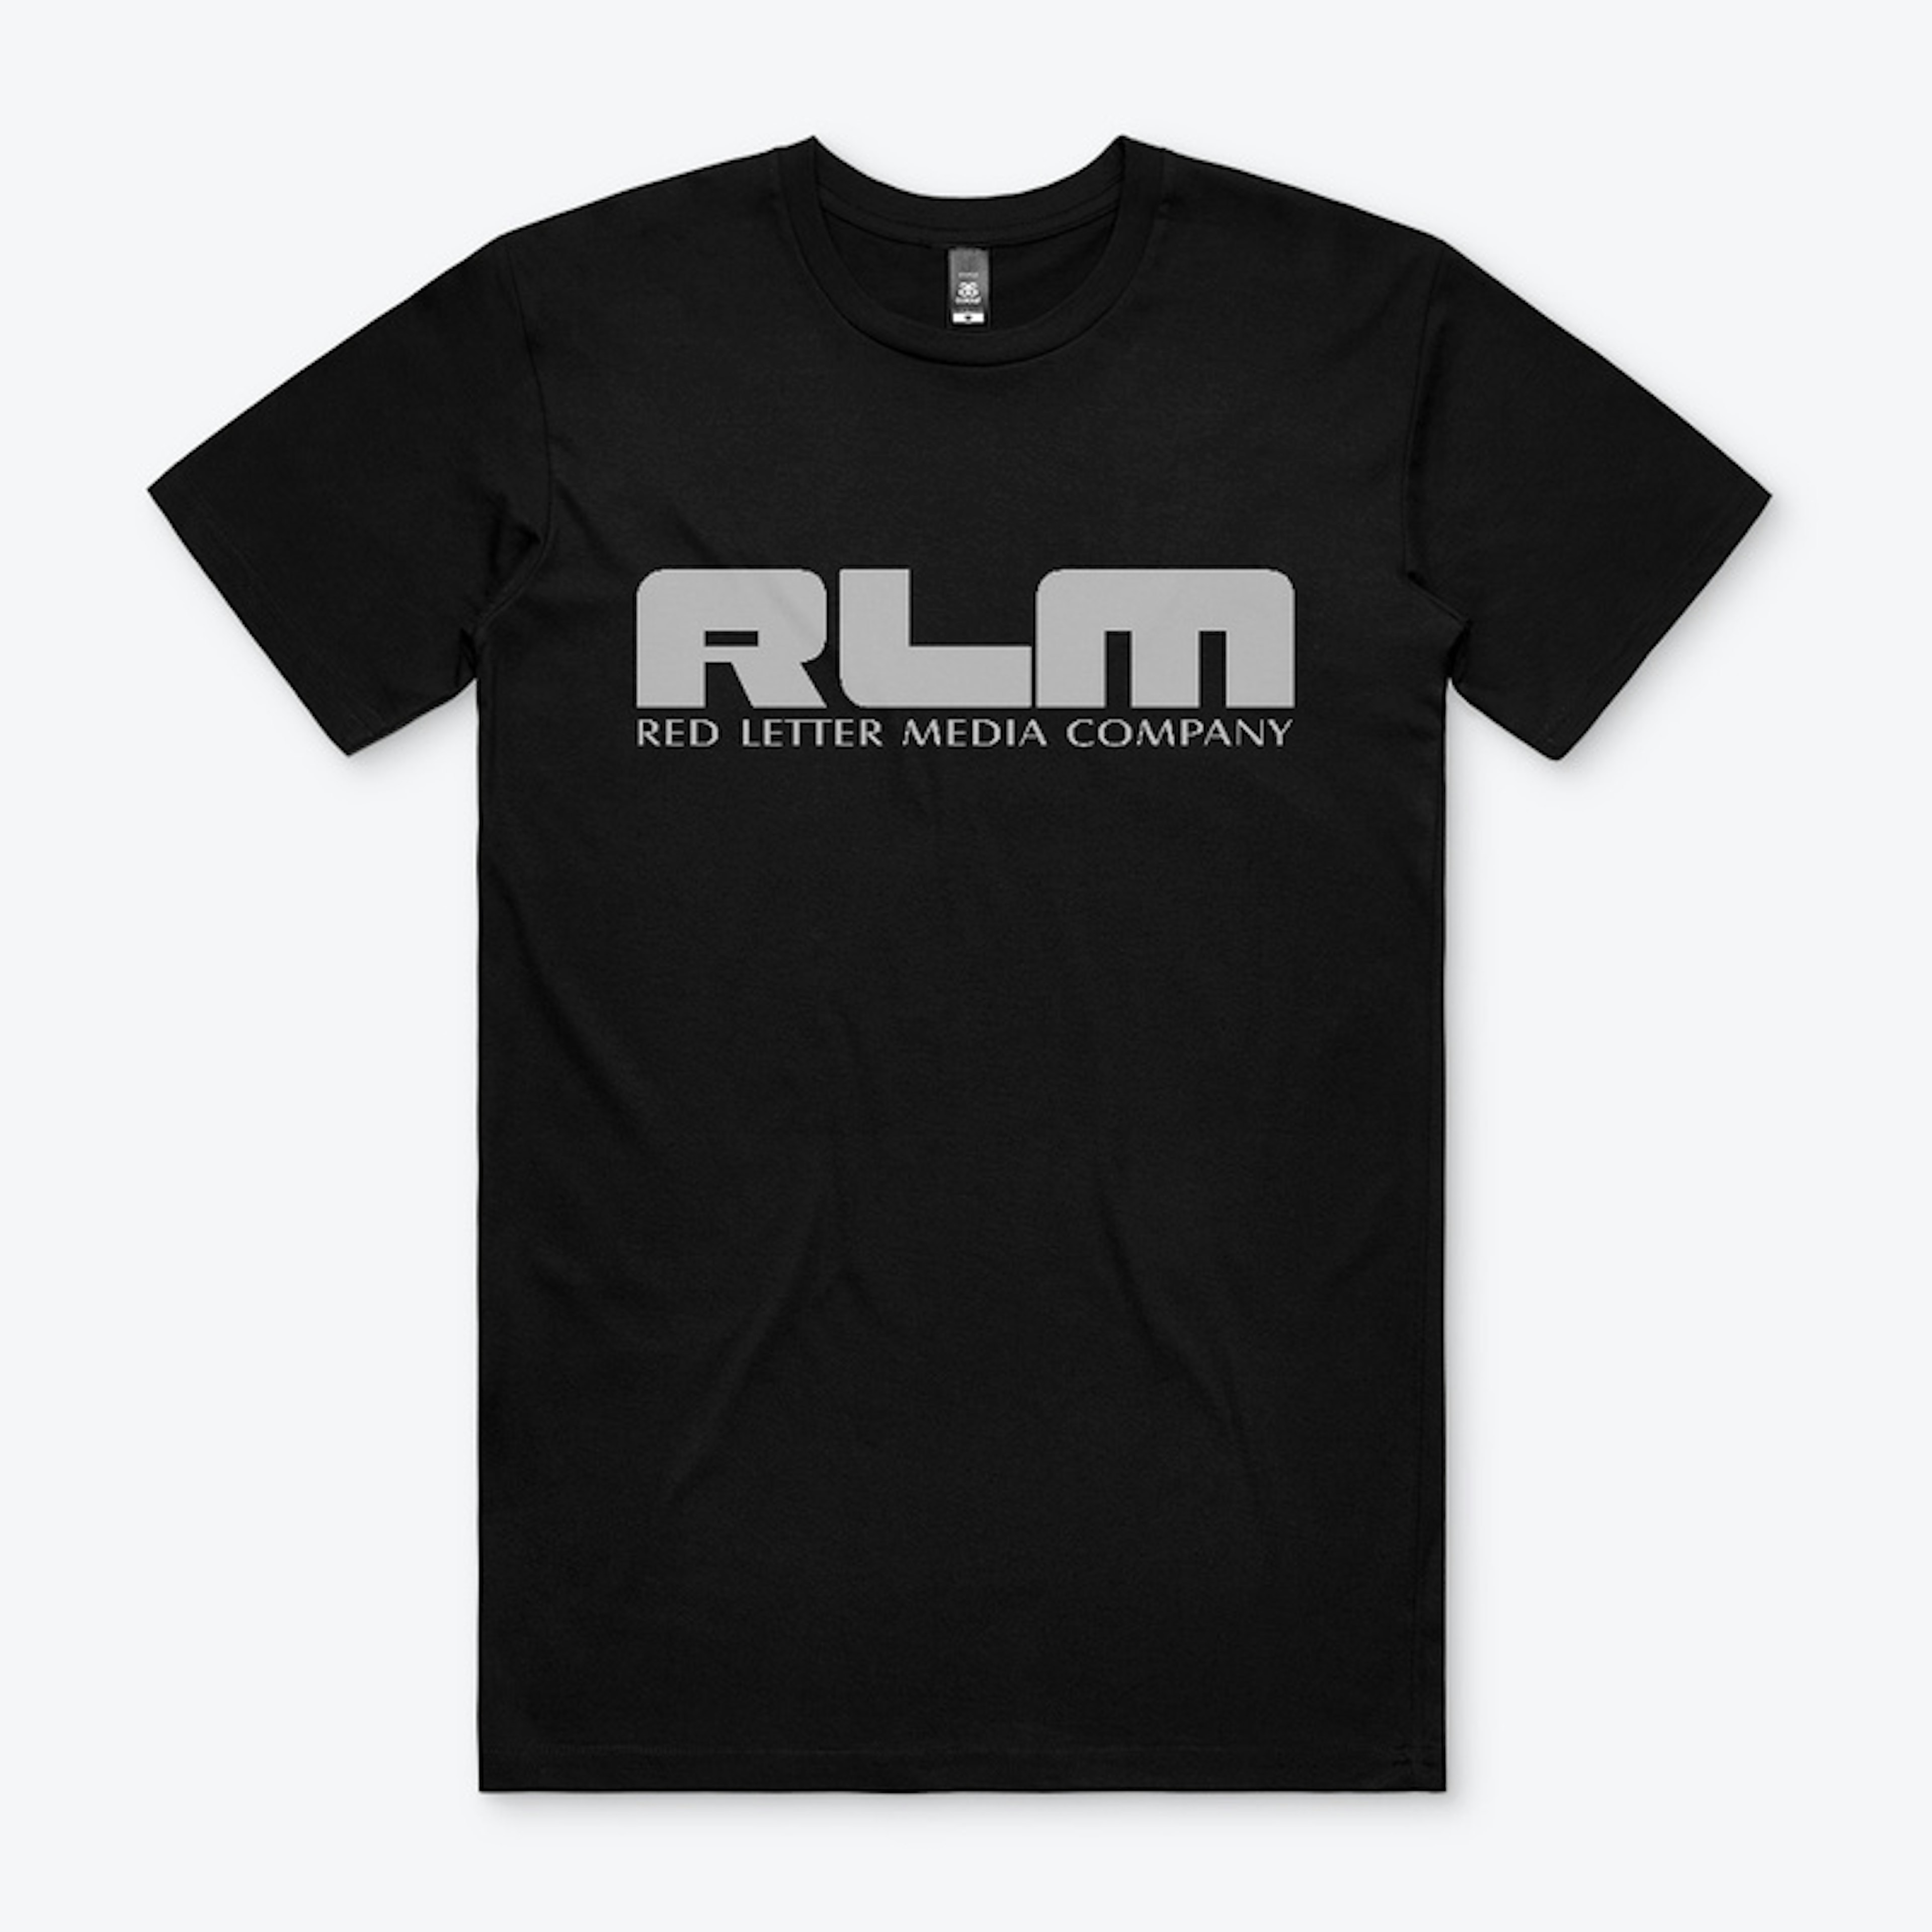 RLM Delorean style logo